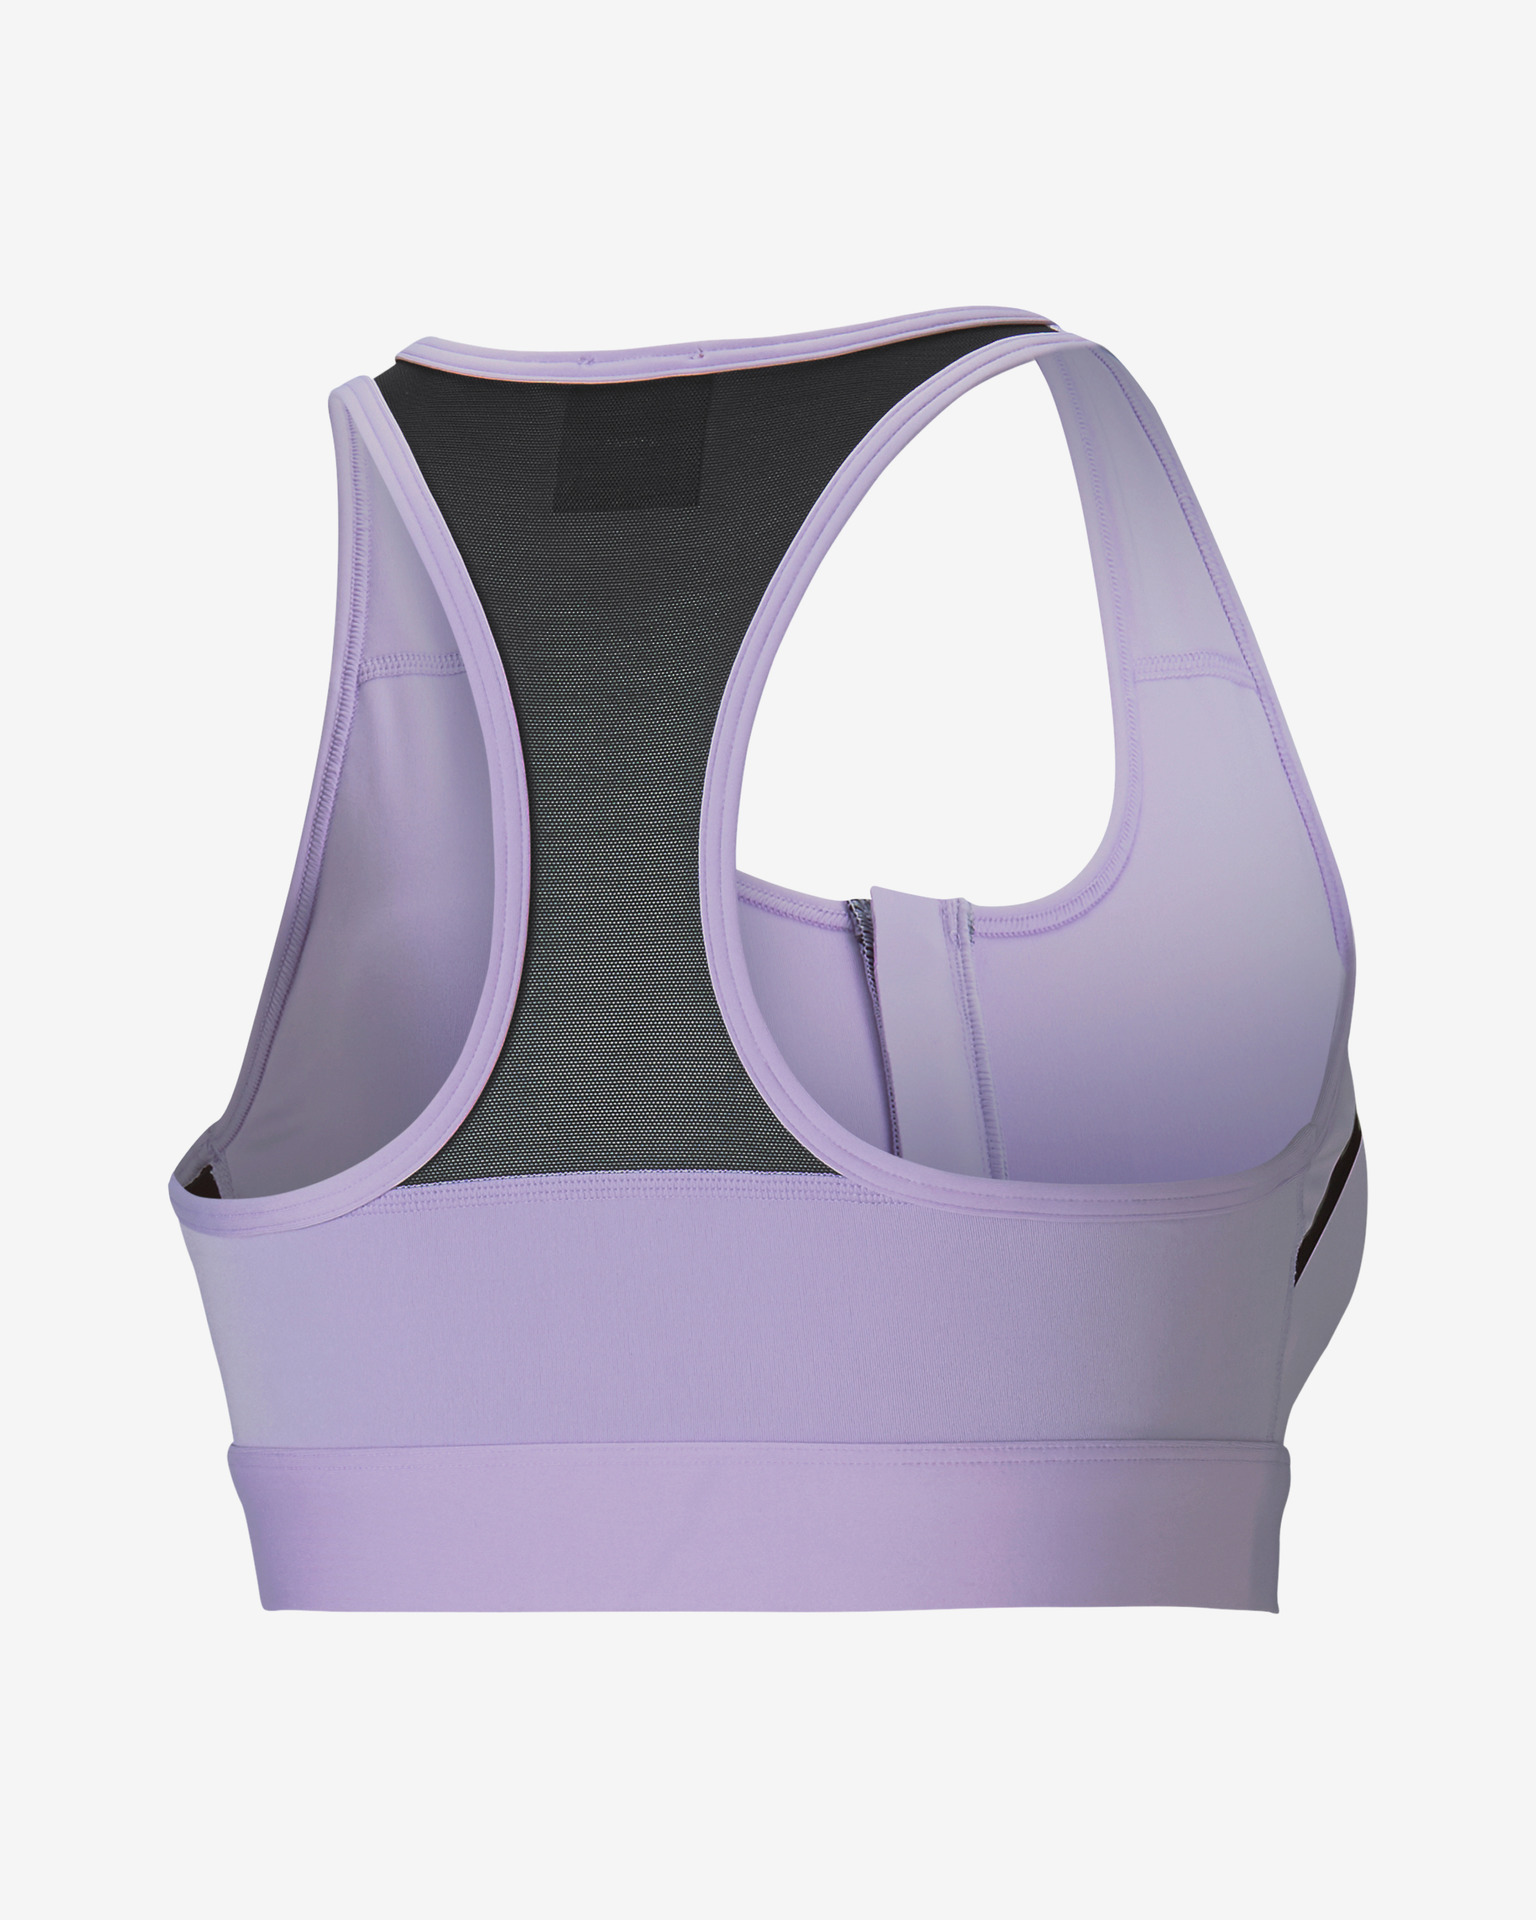 Women's PUMA Reflective Printed High-Impact Running Bra in Vivid Violet  size XL